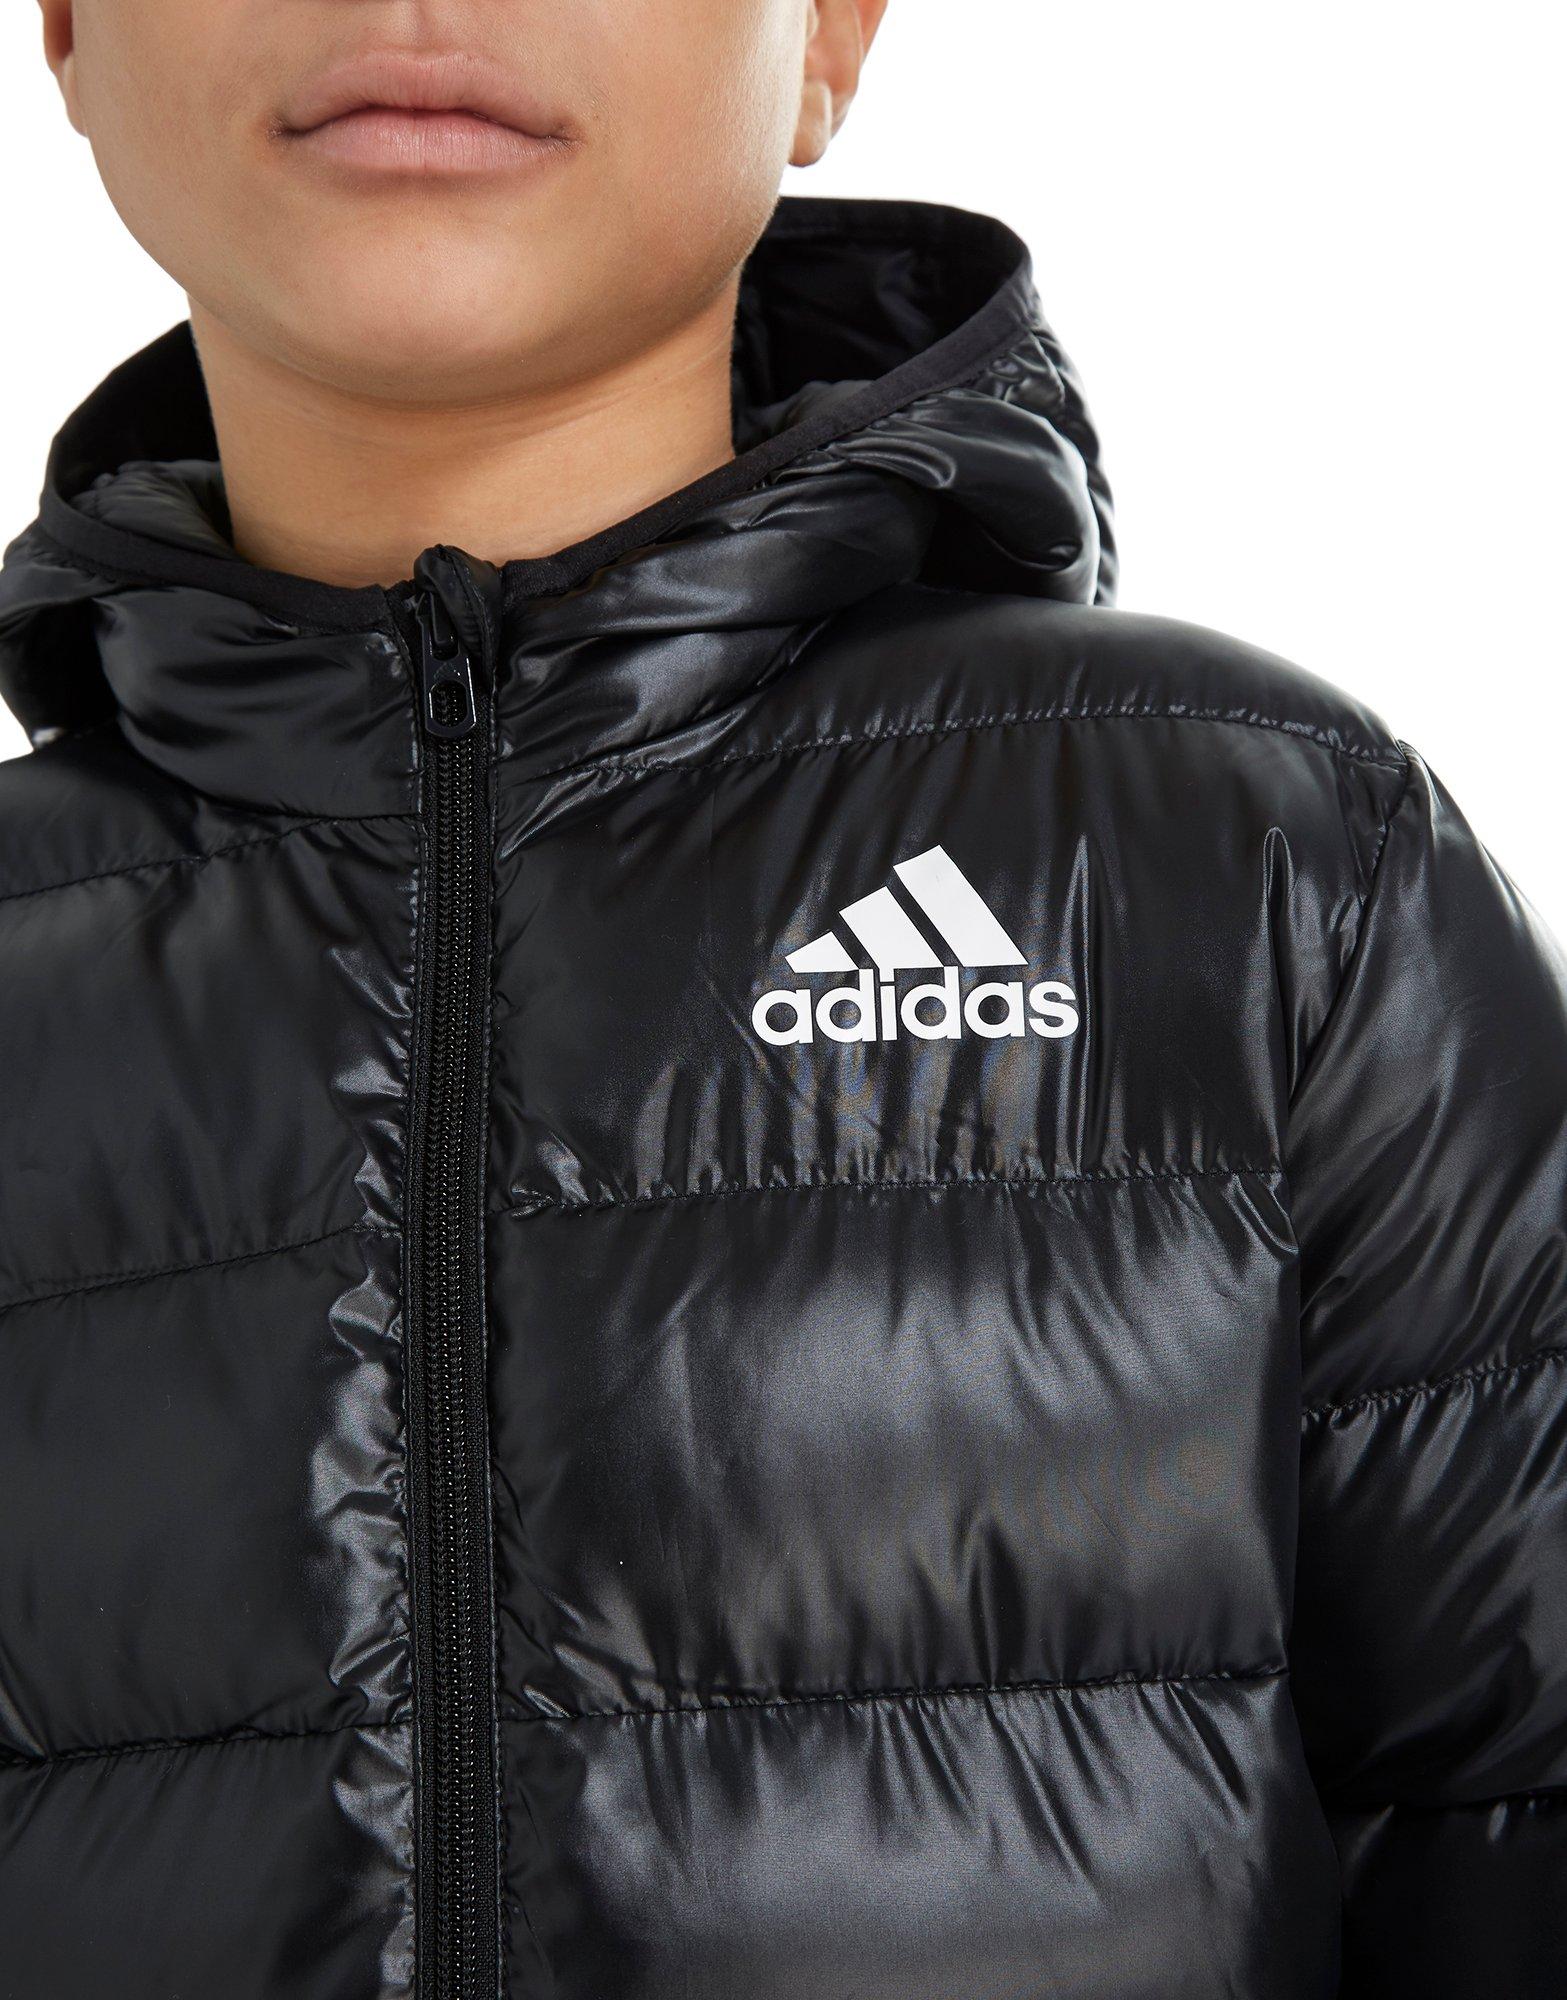 adidas junior bomber jacket